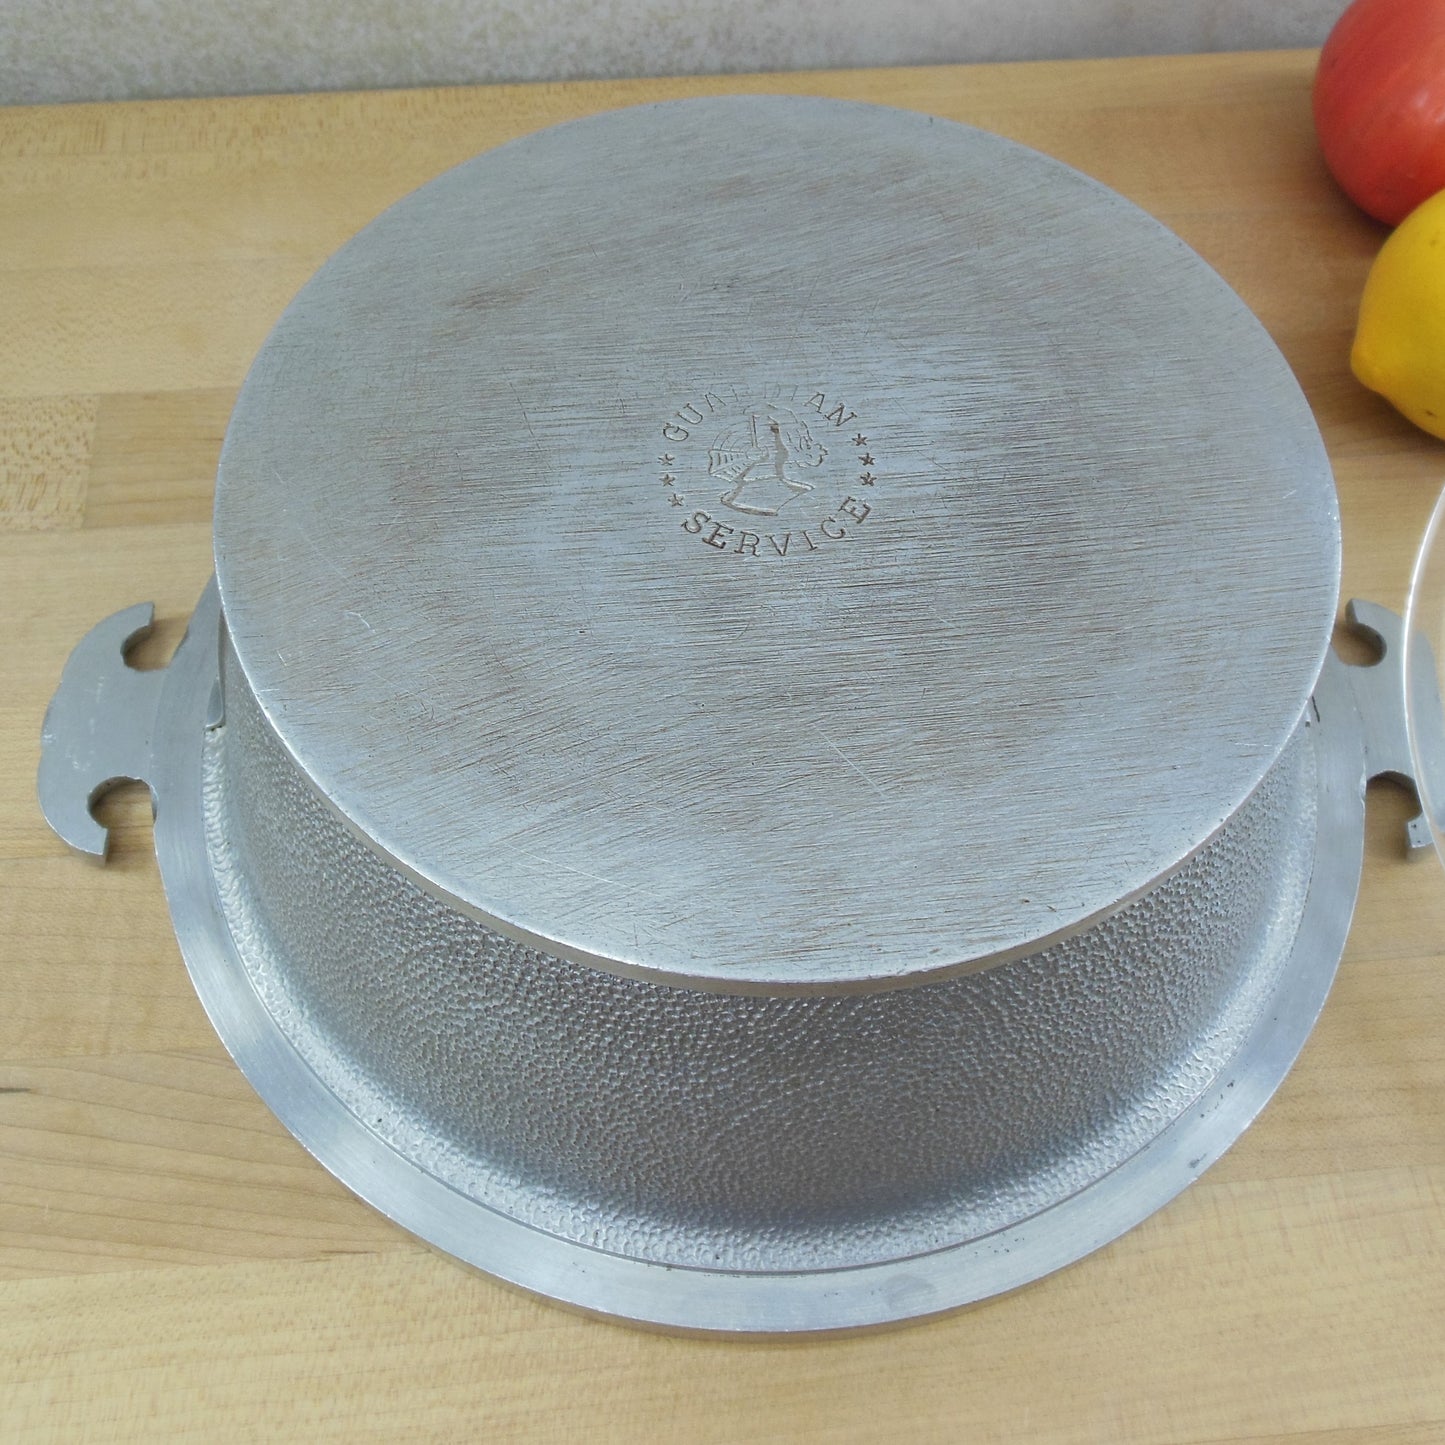 Guardian Service Ware Aluminum 3 Quart Round Roaster Pot & Glass Lid Used